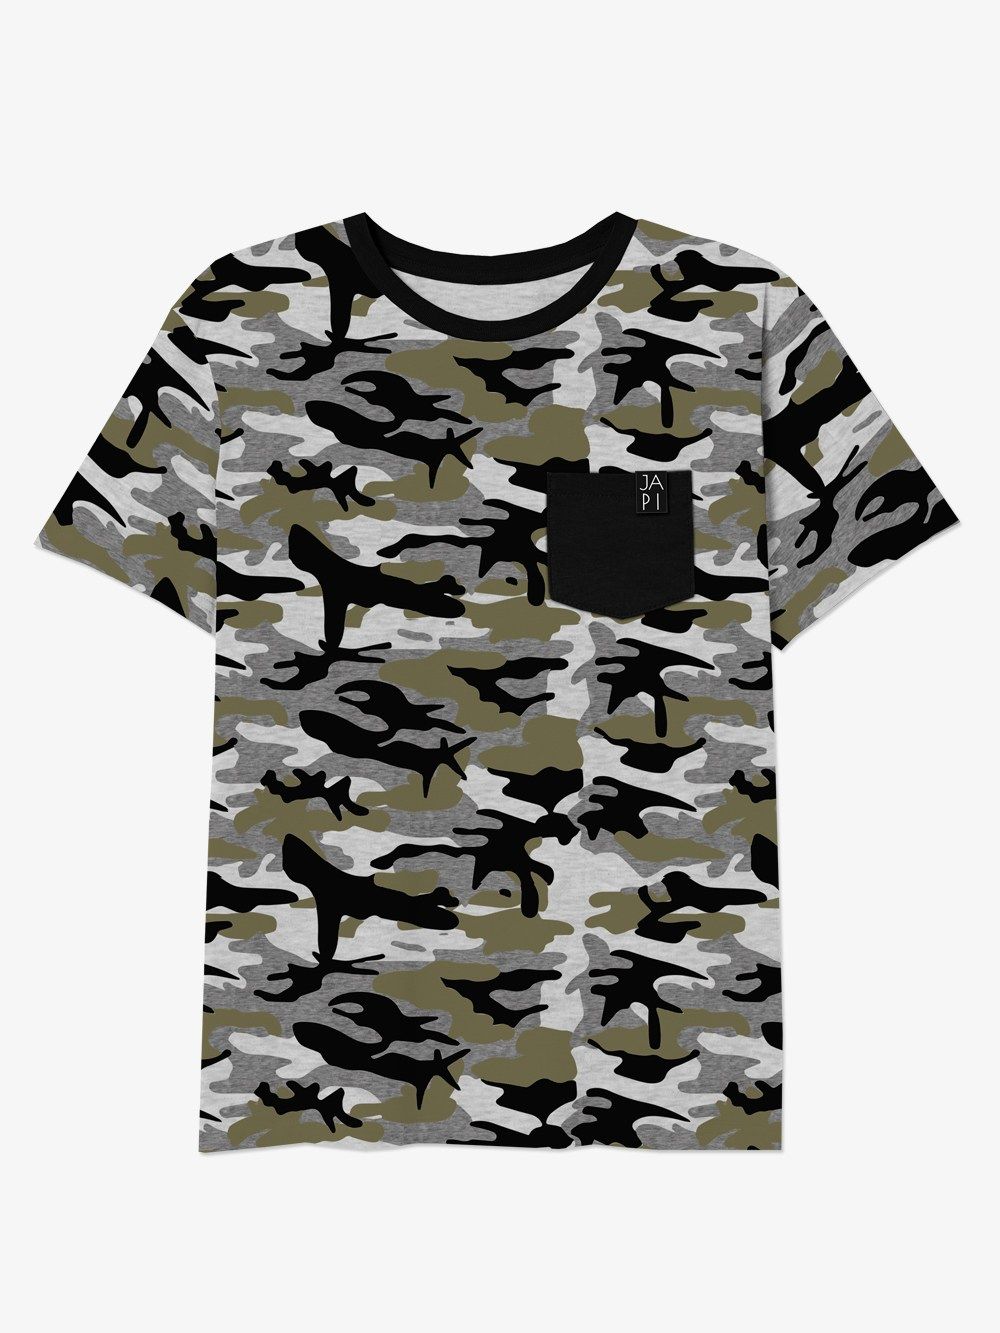 Men's T-shirt Camouflage